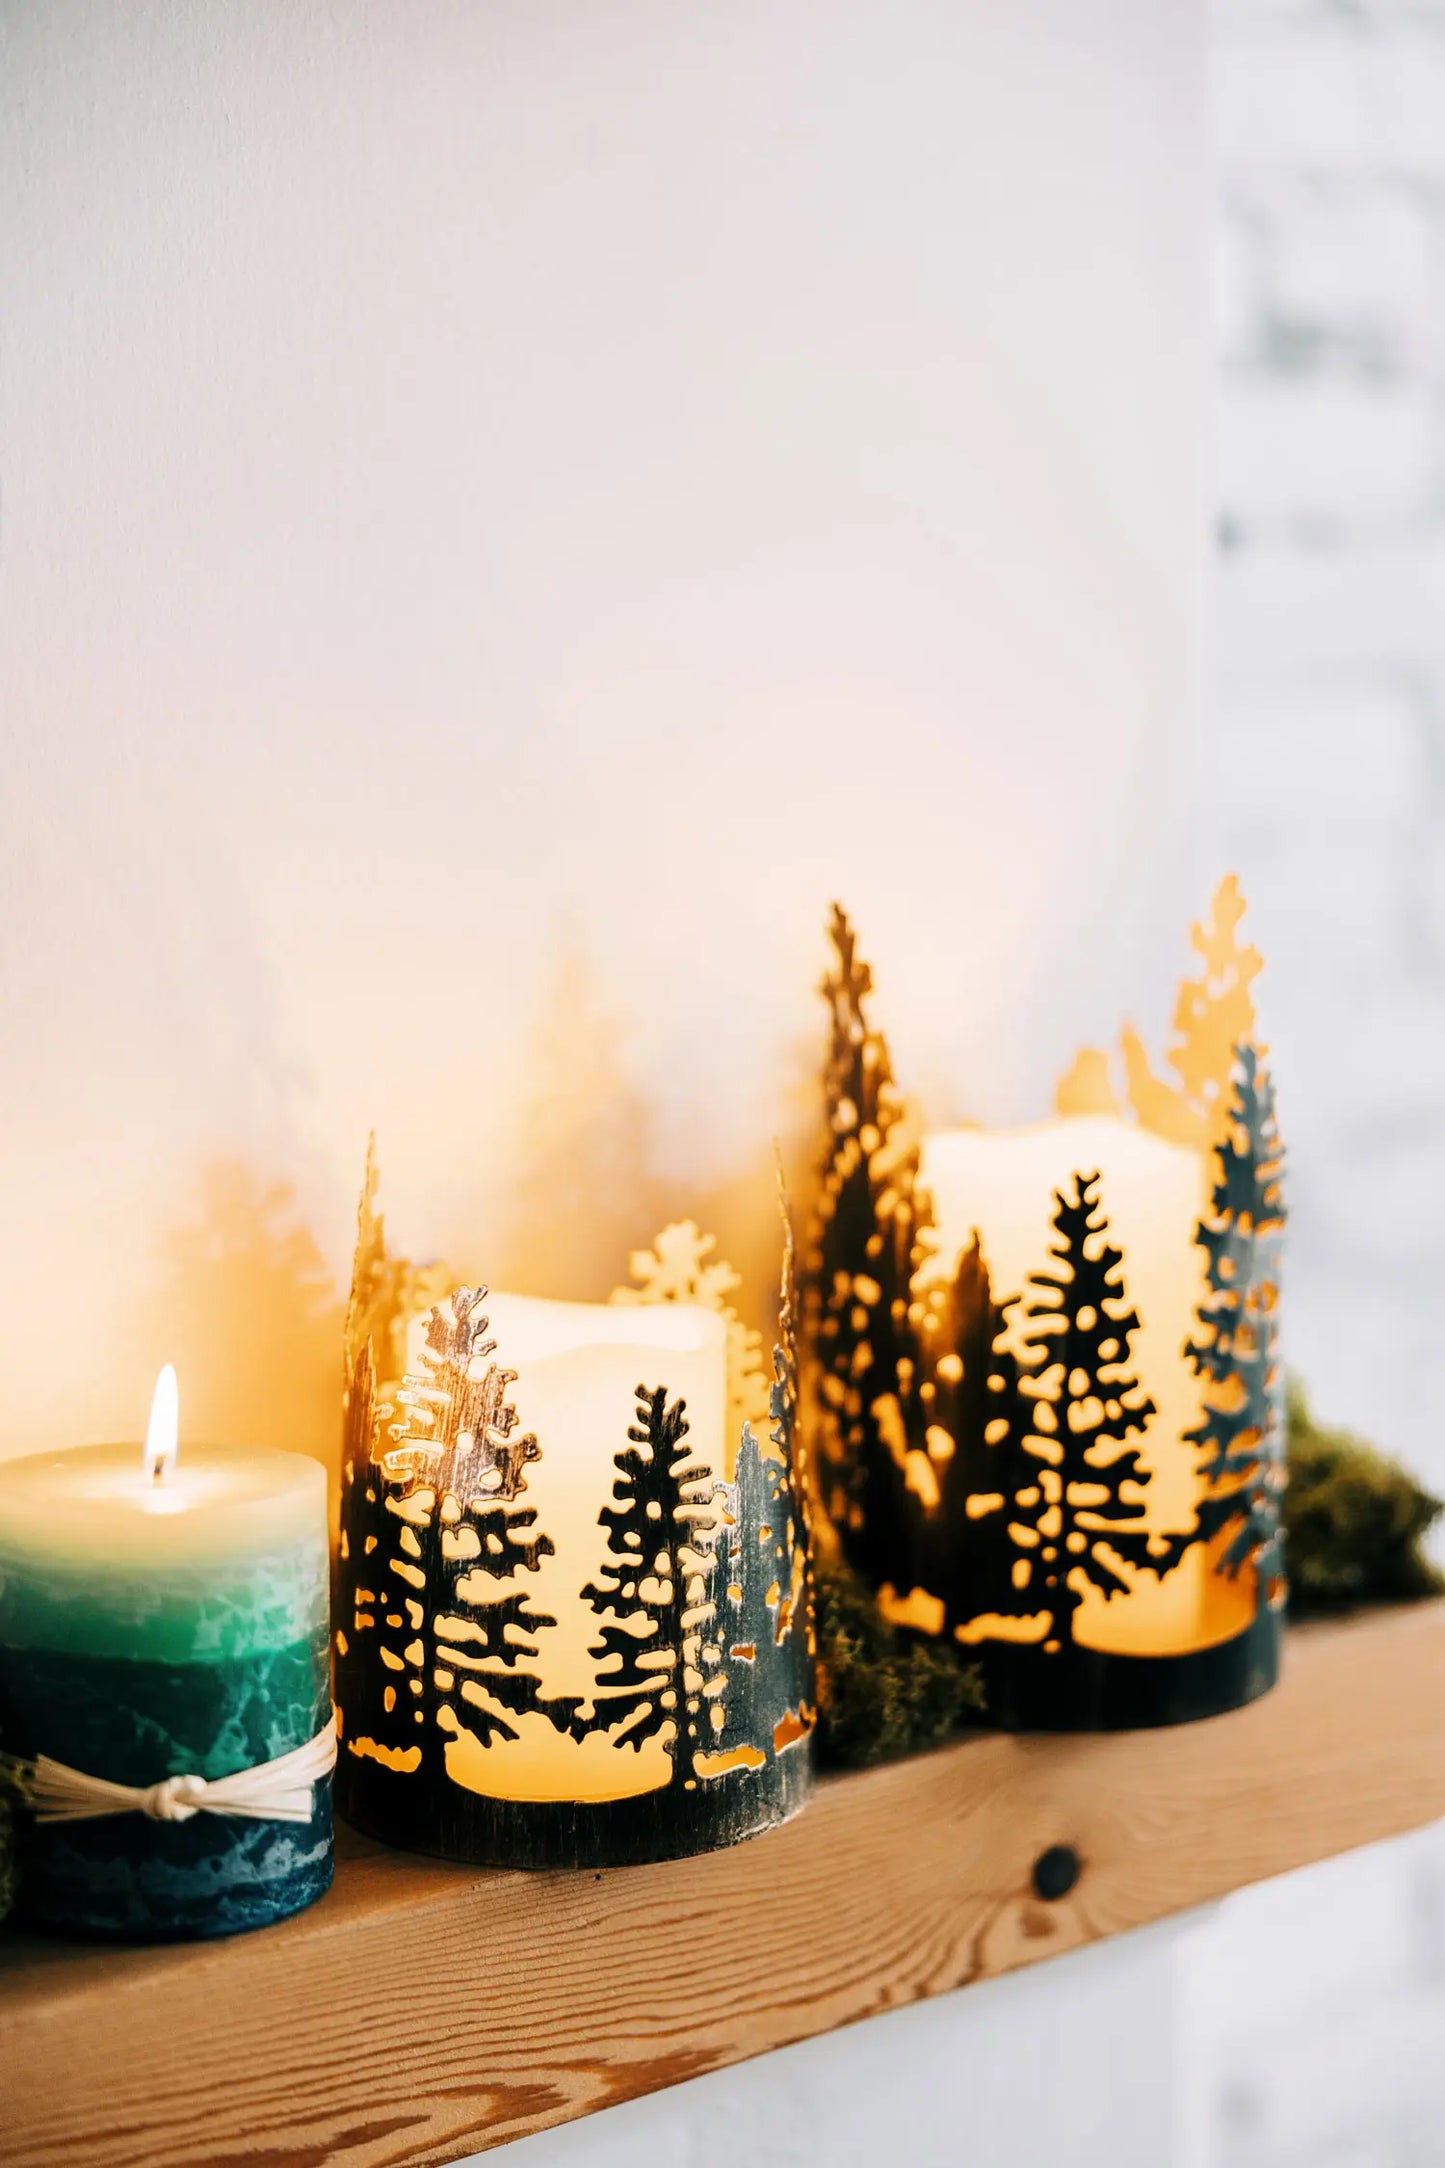 Forest Shimmer Candleholder Medium